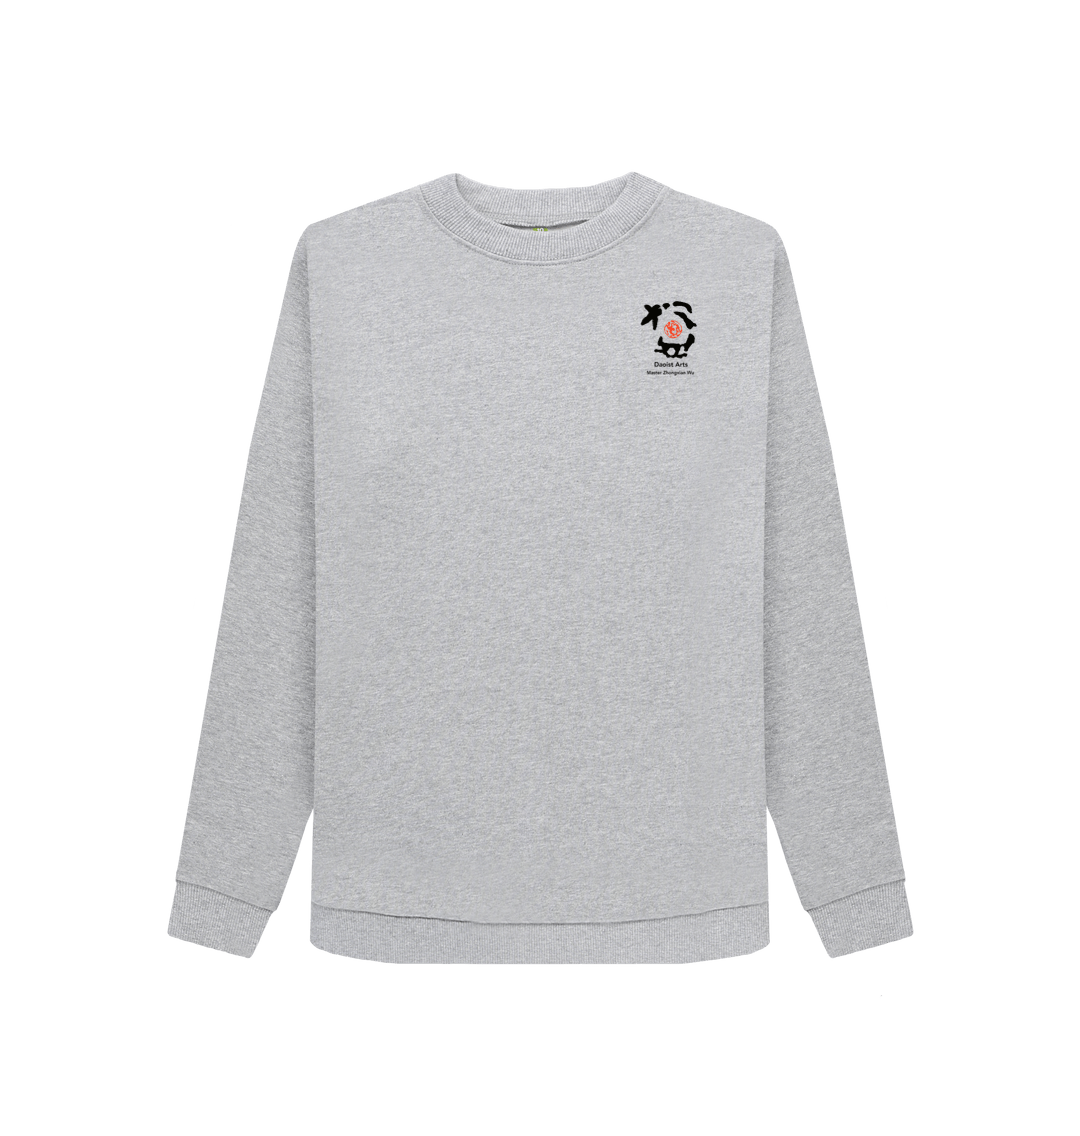 Oracle Bone Talisman sweatshirt - Yin style